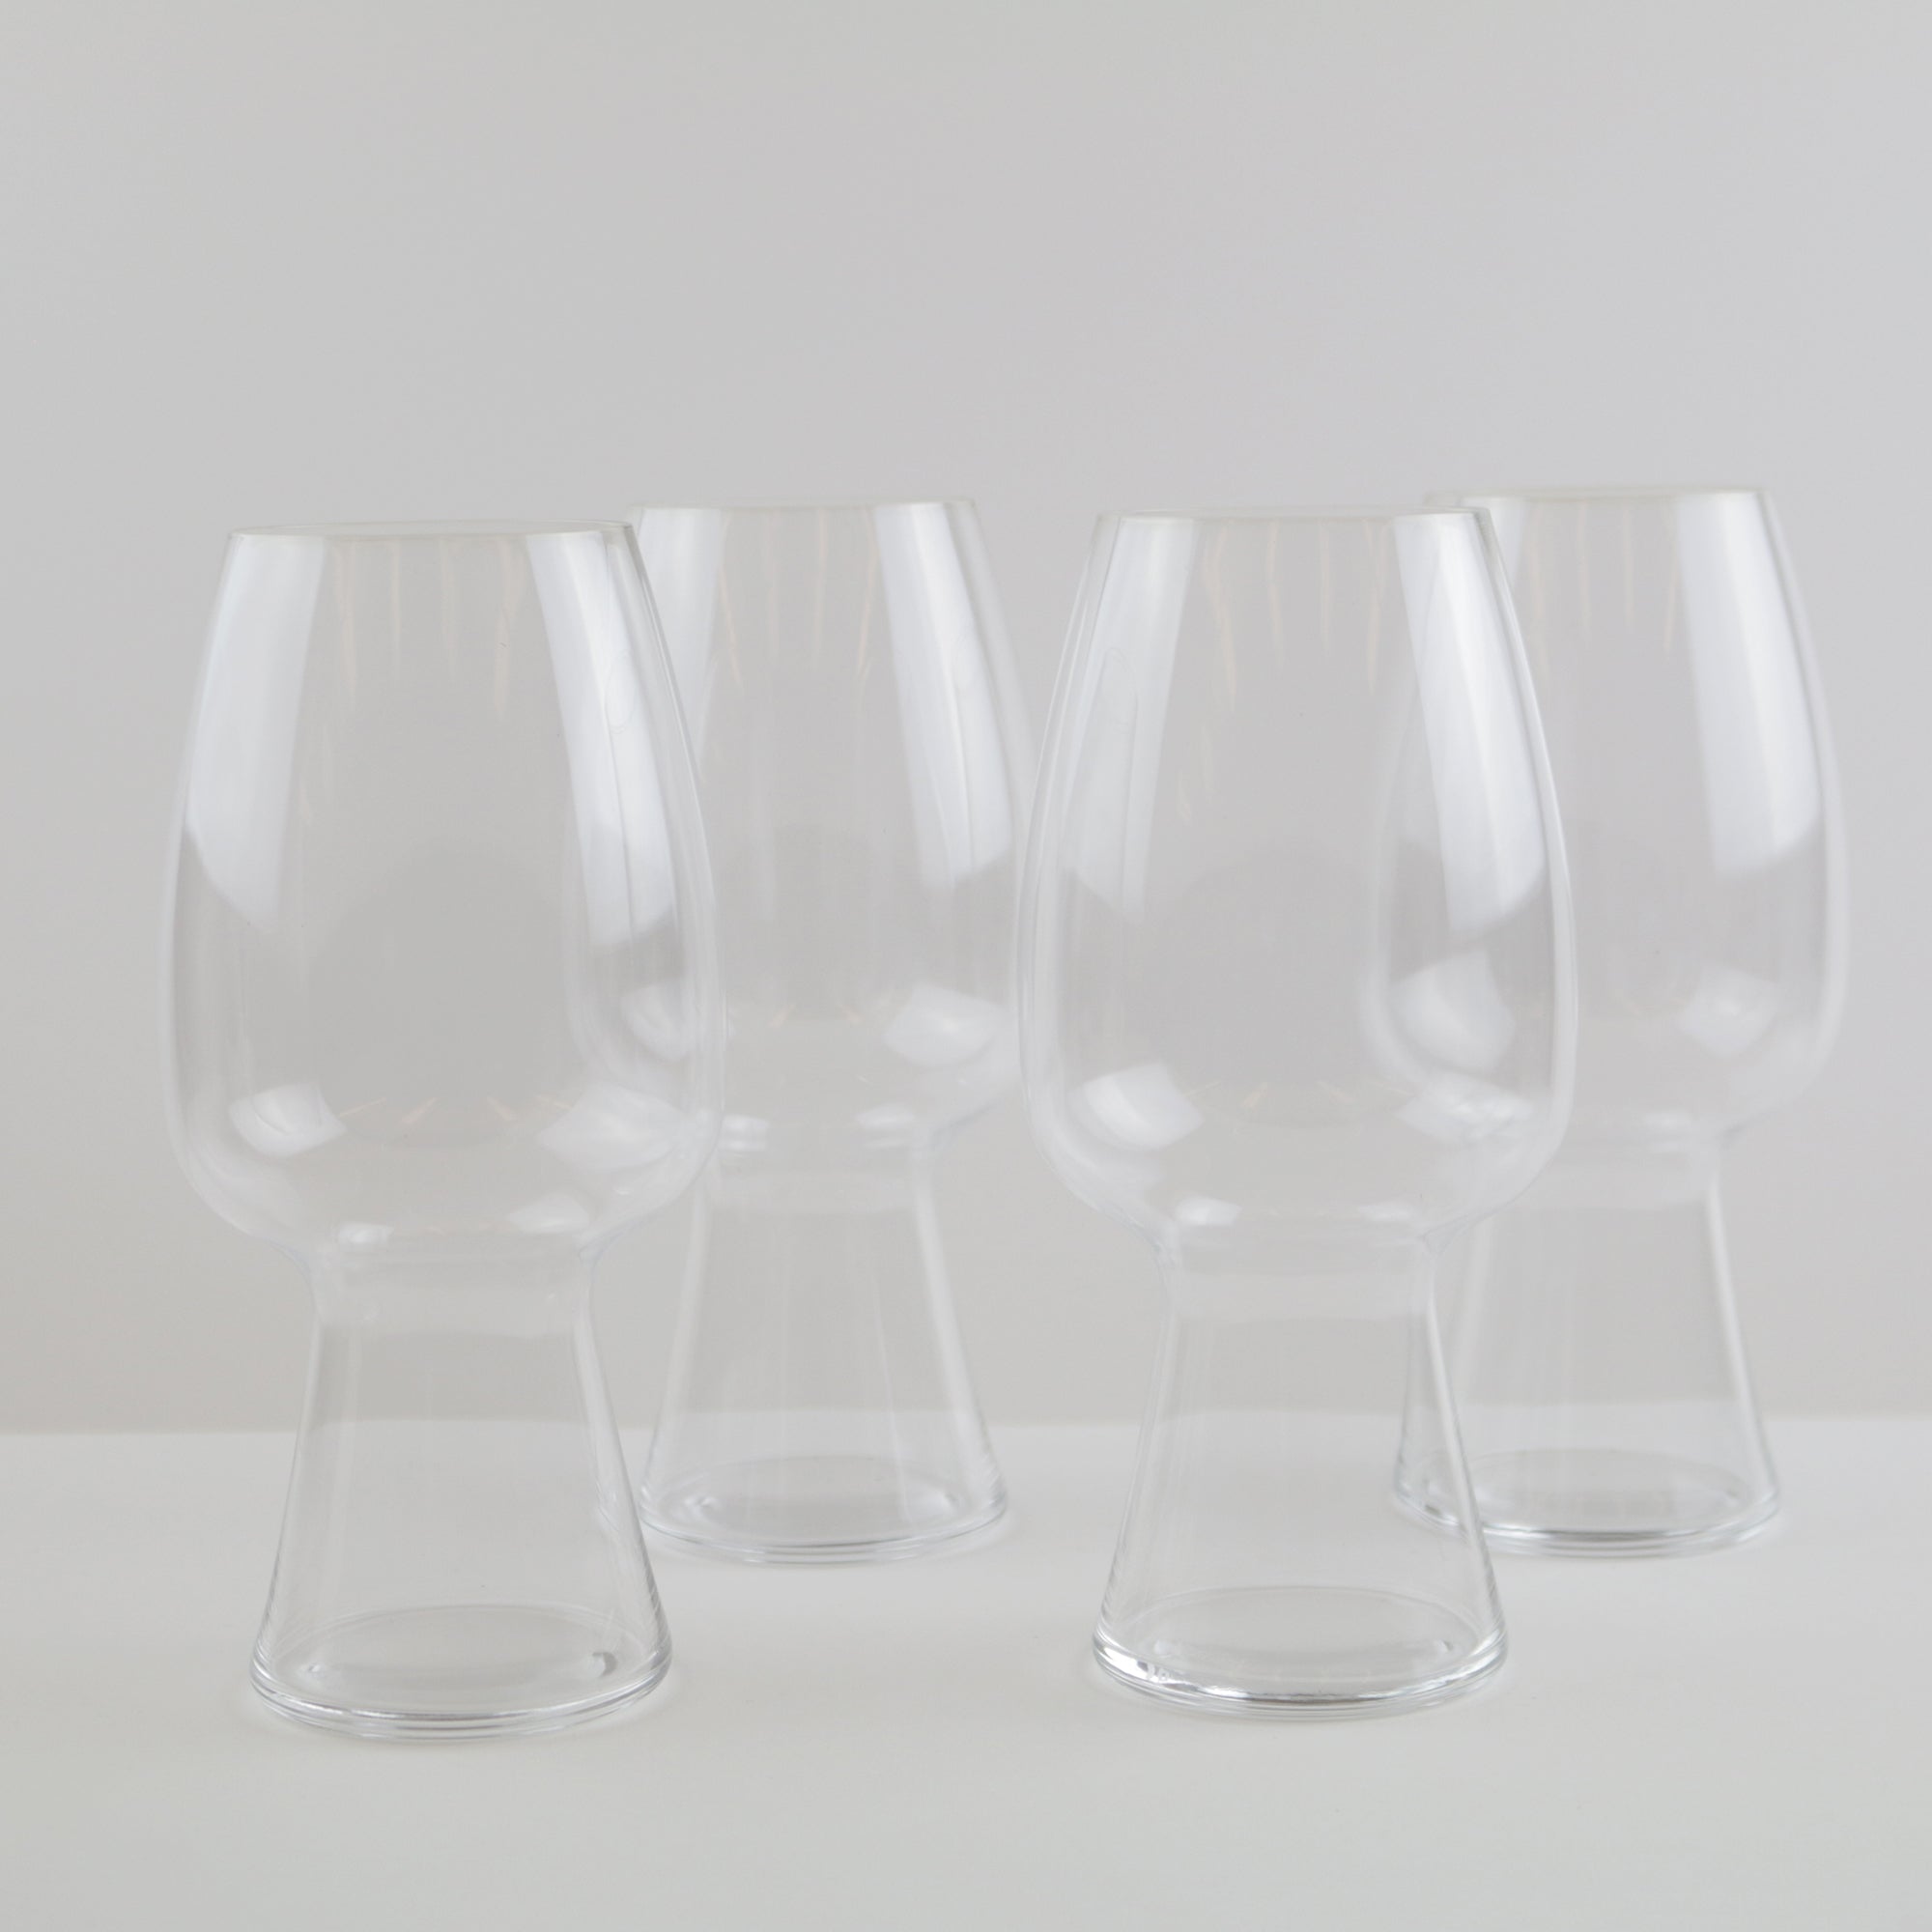 Spiegelau Stout Glass (Set of 4)